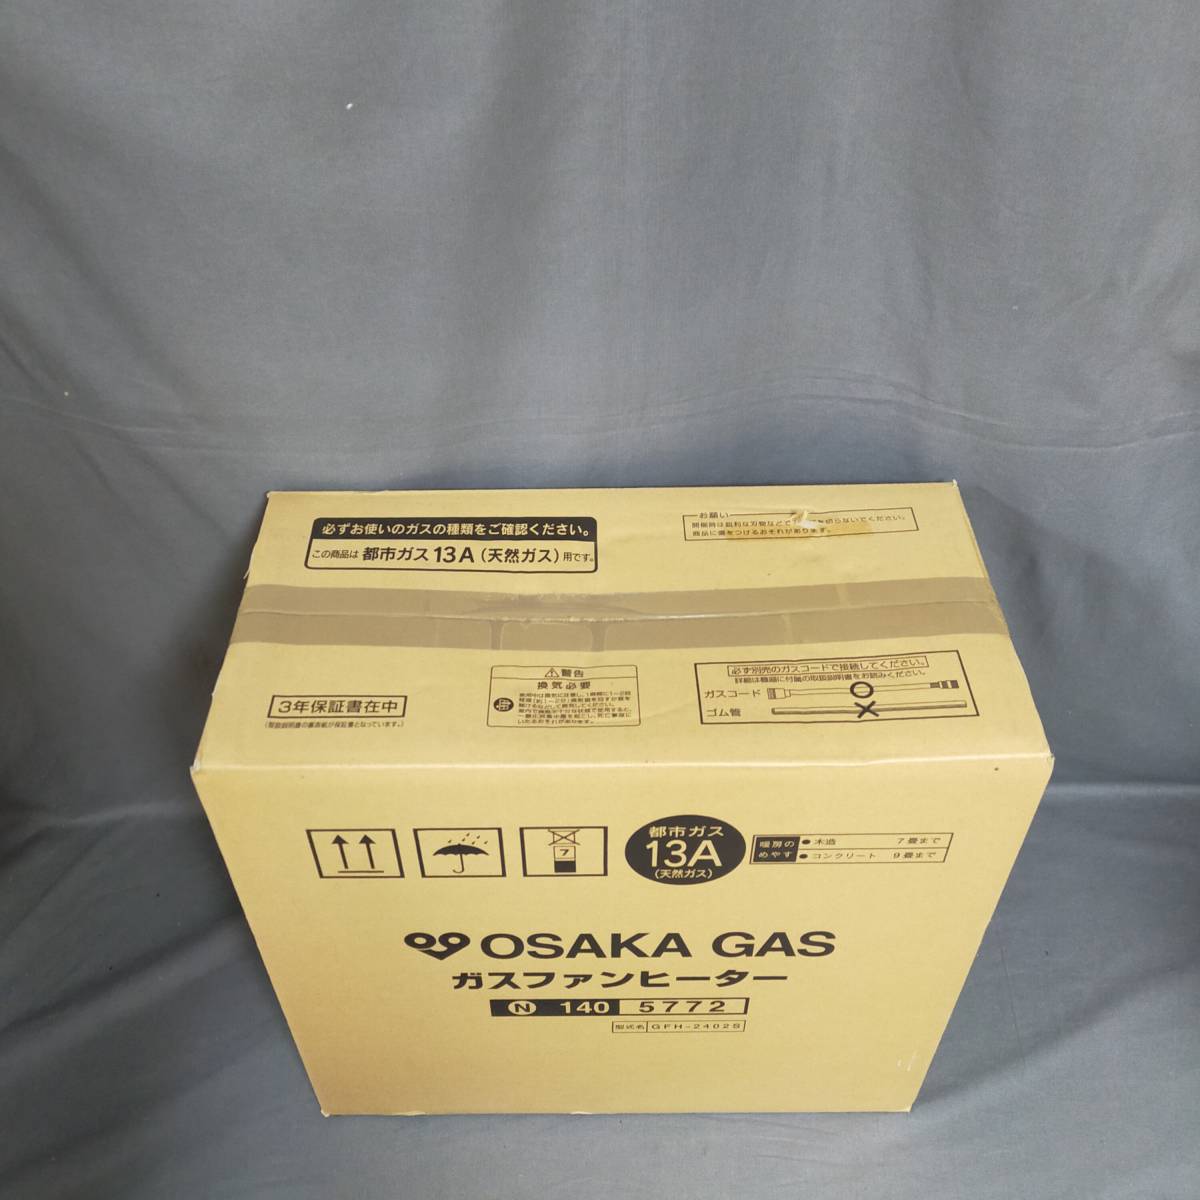 5511/10 188561 OSAKA GAS ガスファンヒーター N140-5772 天然ガス13A